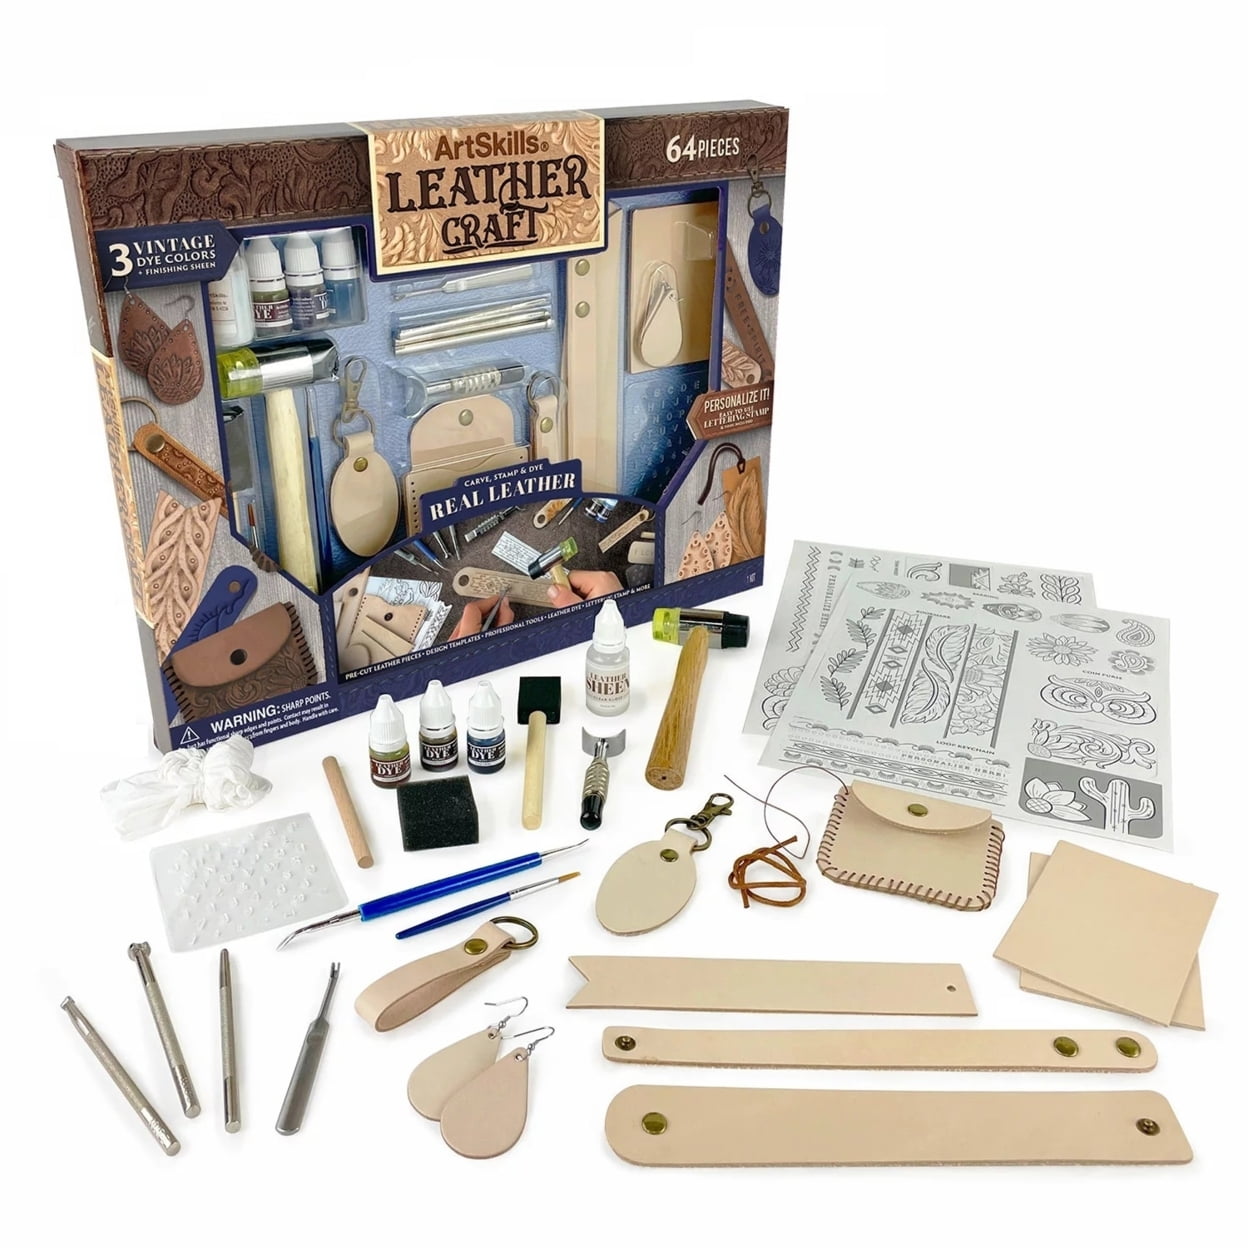 Beginner's Leathercrafting Tool Kit